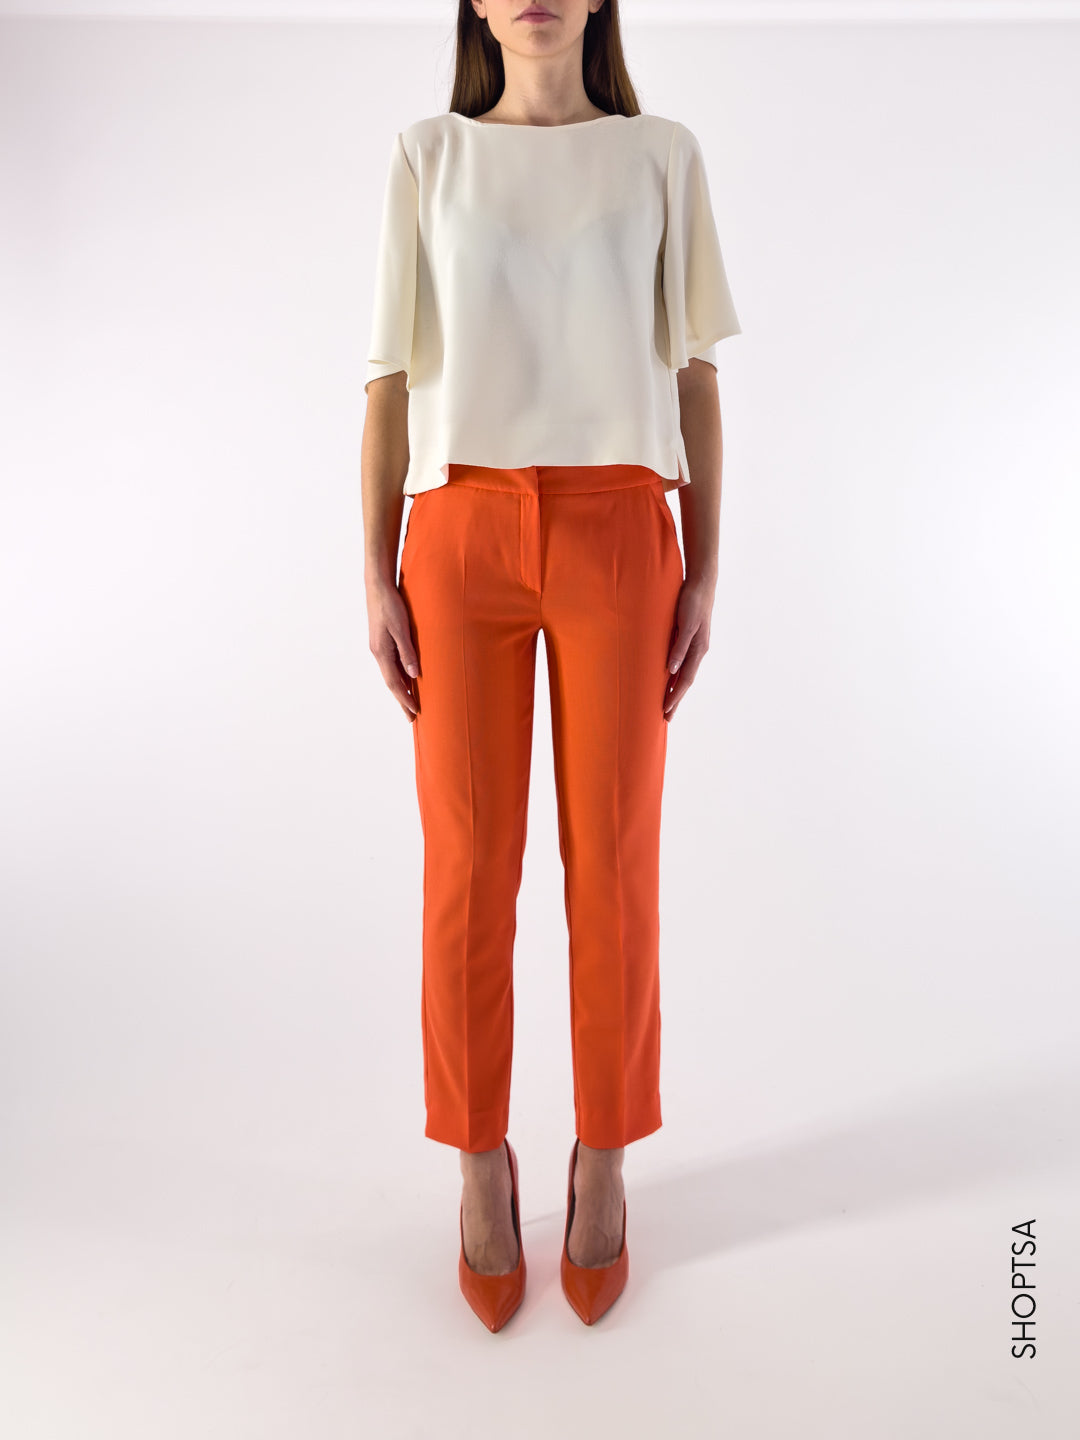 MUSETTE2 orange trousers - EMME Marella